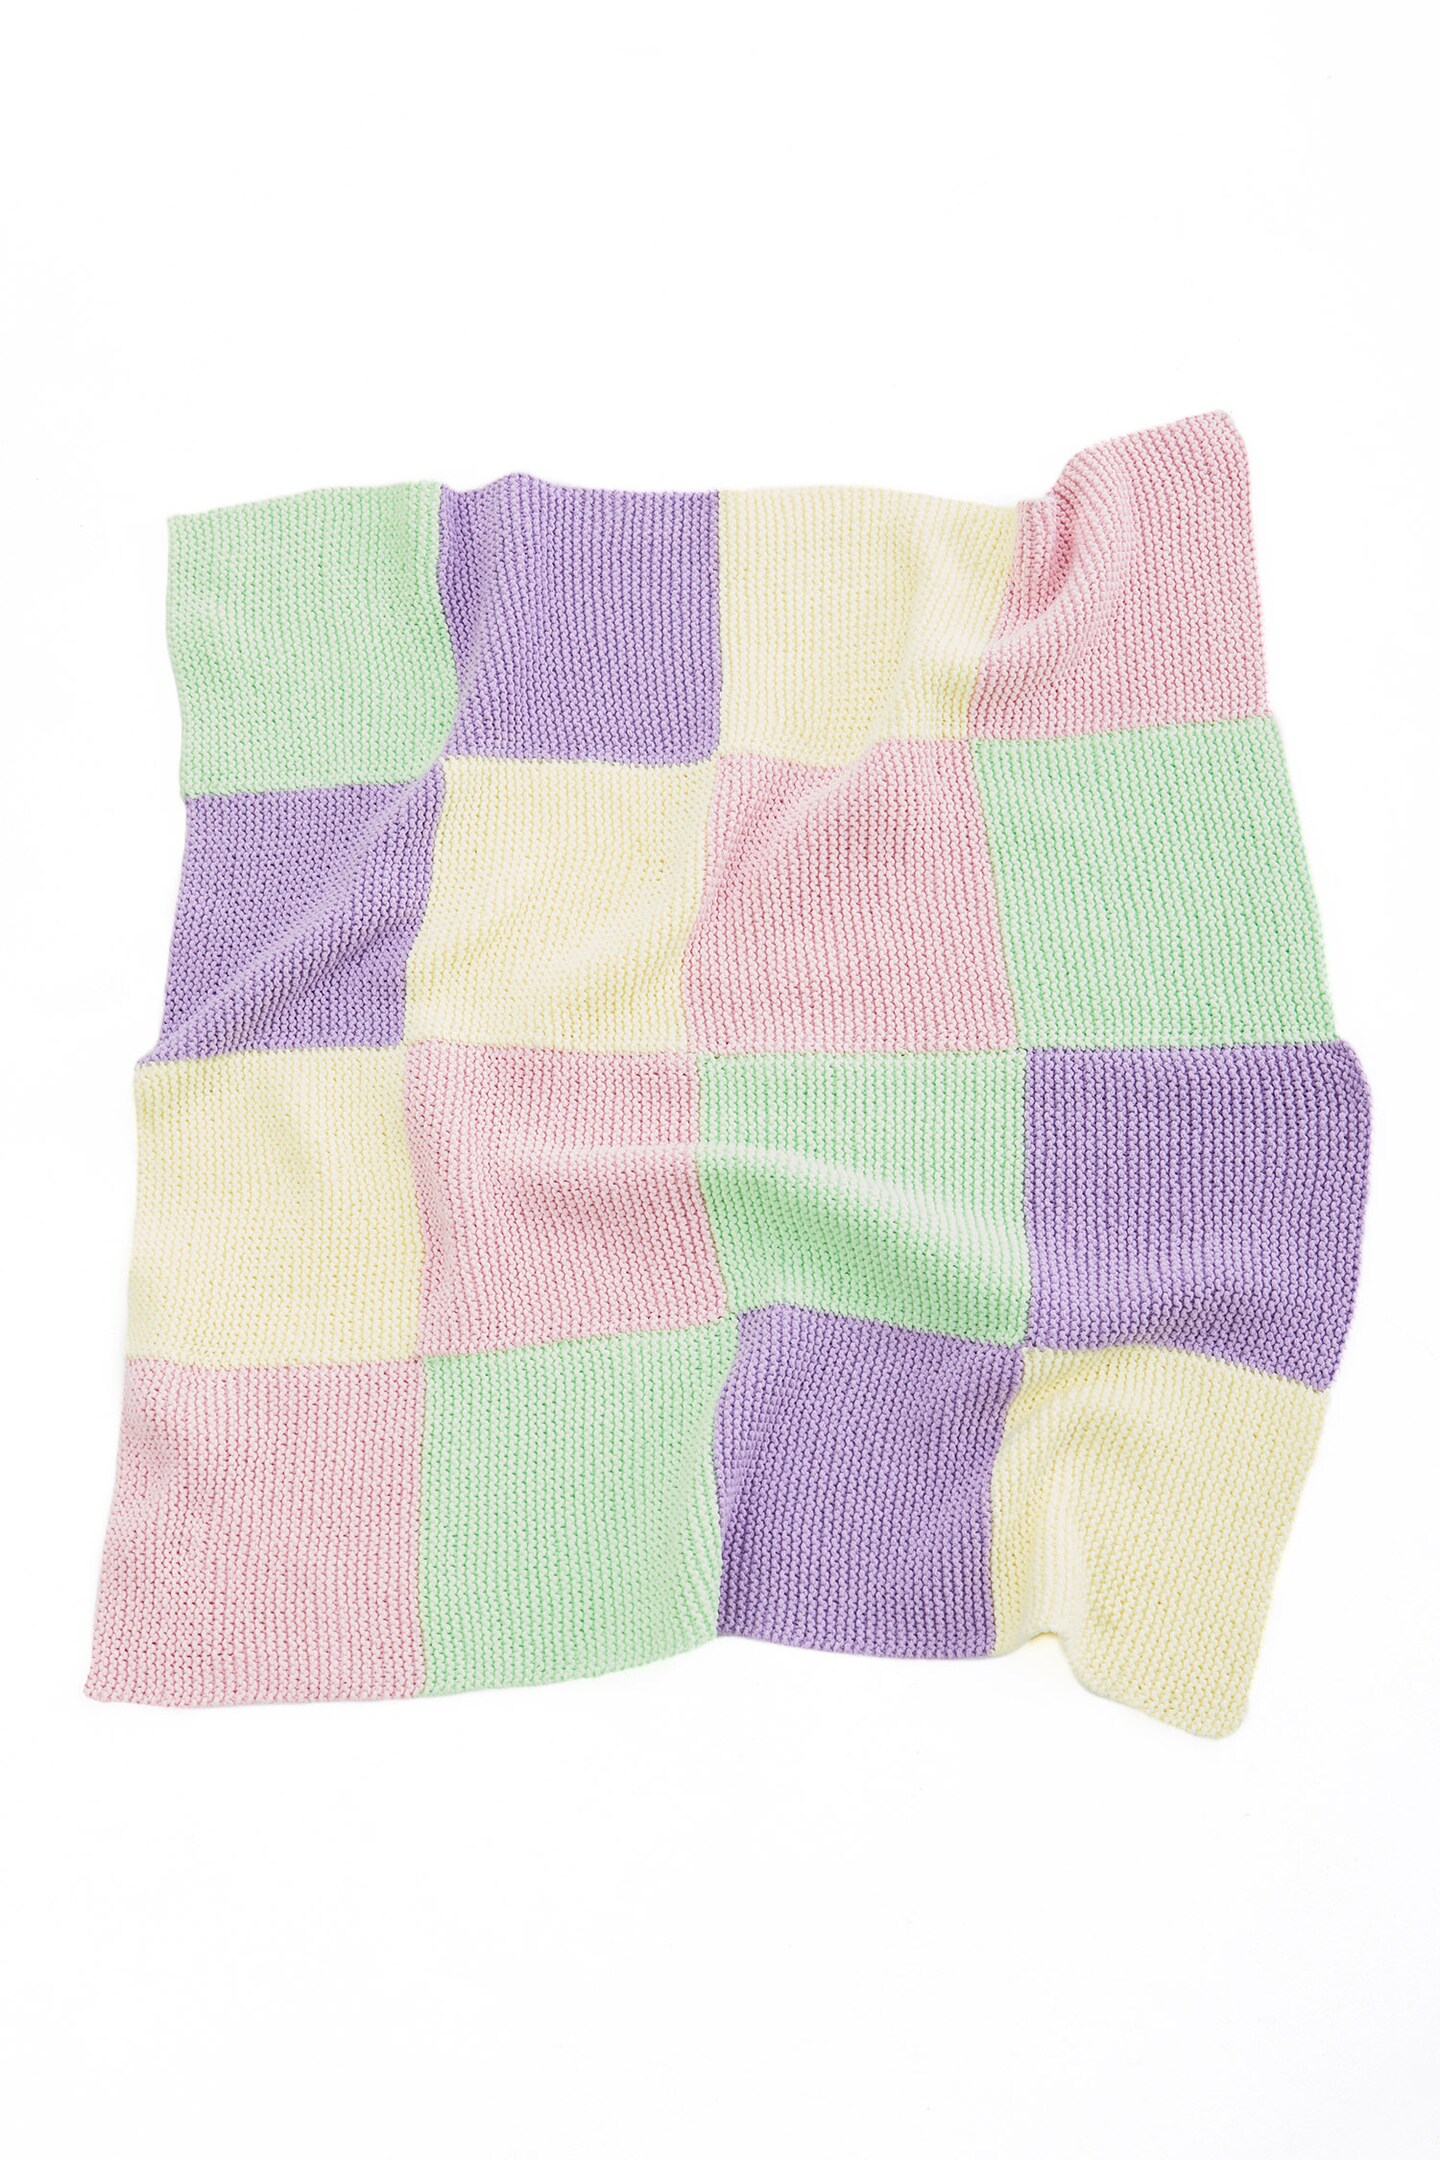 Lion Brand Yarn - Feels Like Butta - 6 Skein Assortment (Pastels) – Craft  Bunch